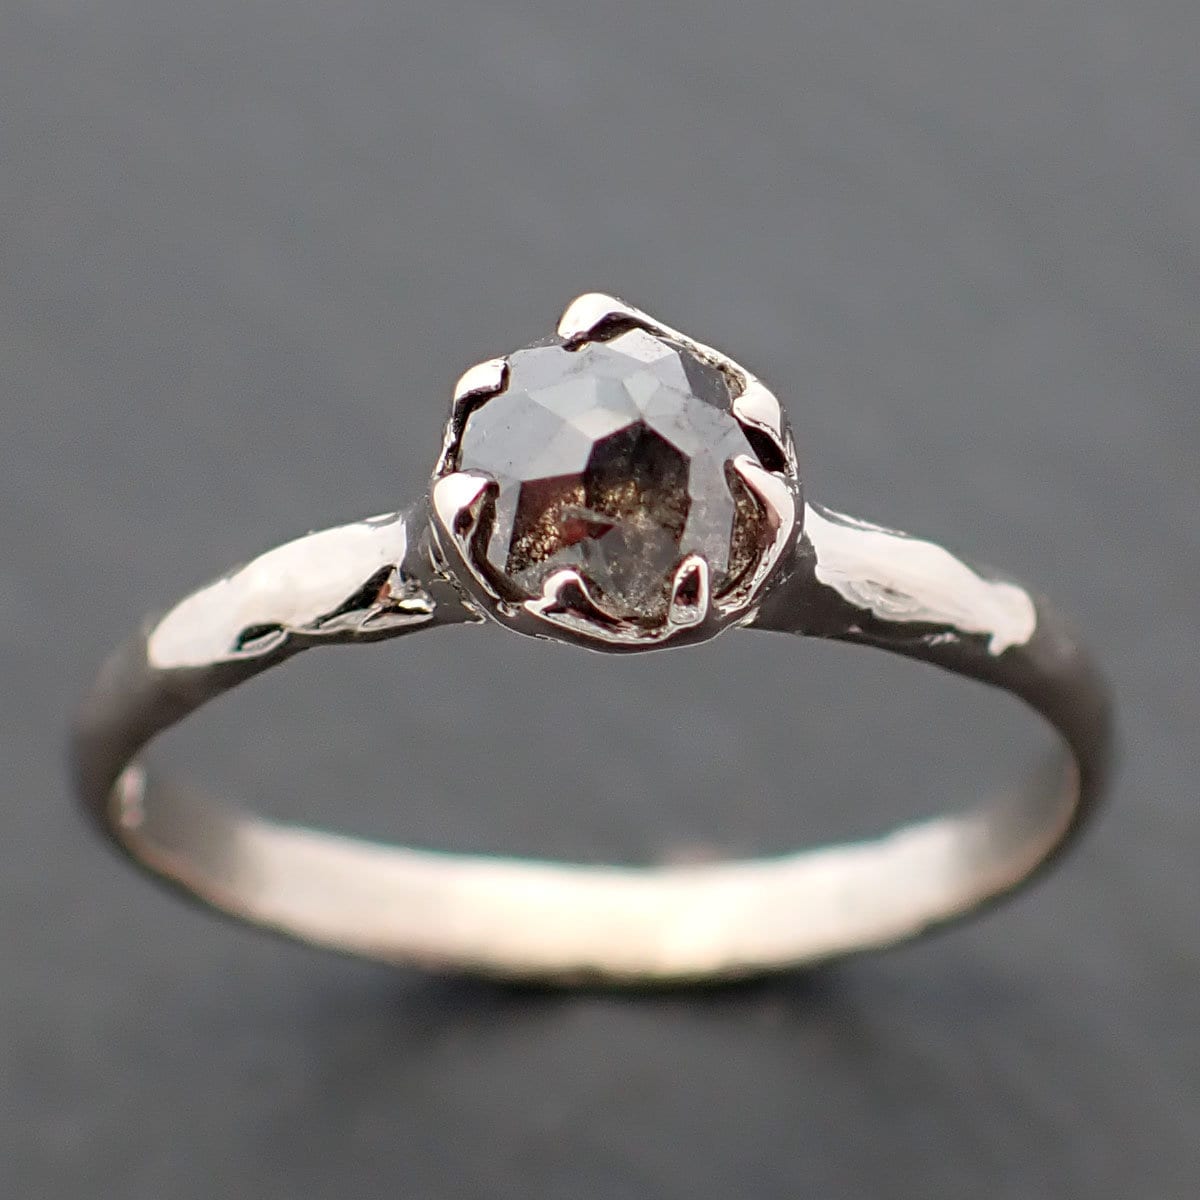 Fancy cut salt and pepper Diamond Solitaire Engagement Ring 14k White Gold Rough Diamond ring byAngeline 3496